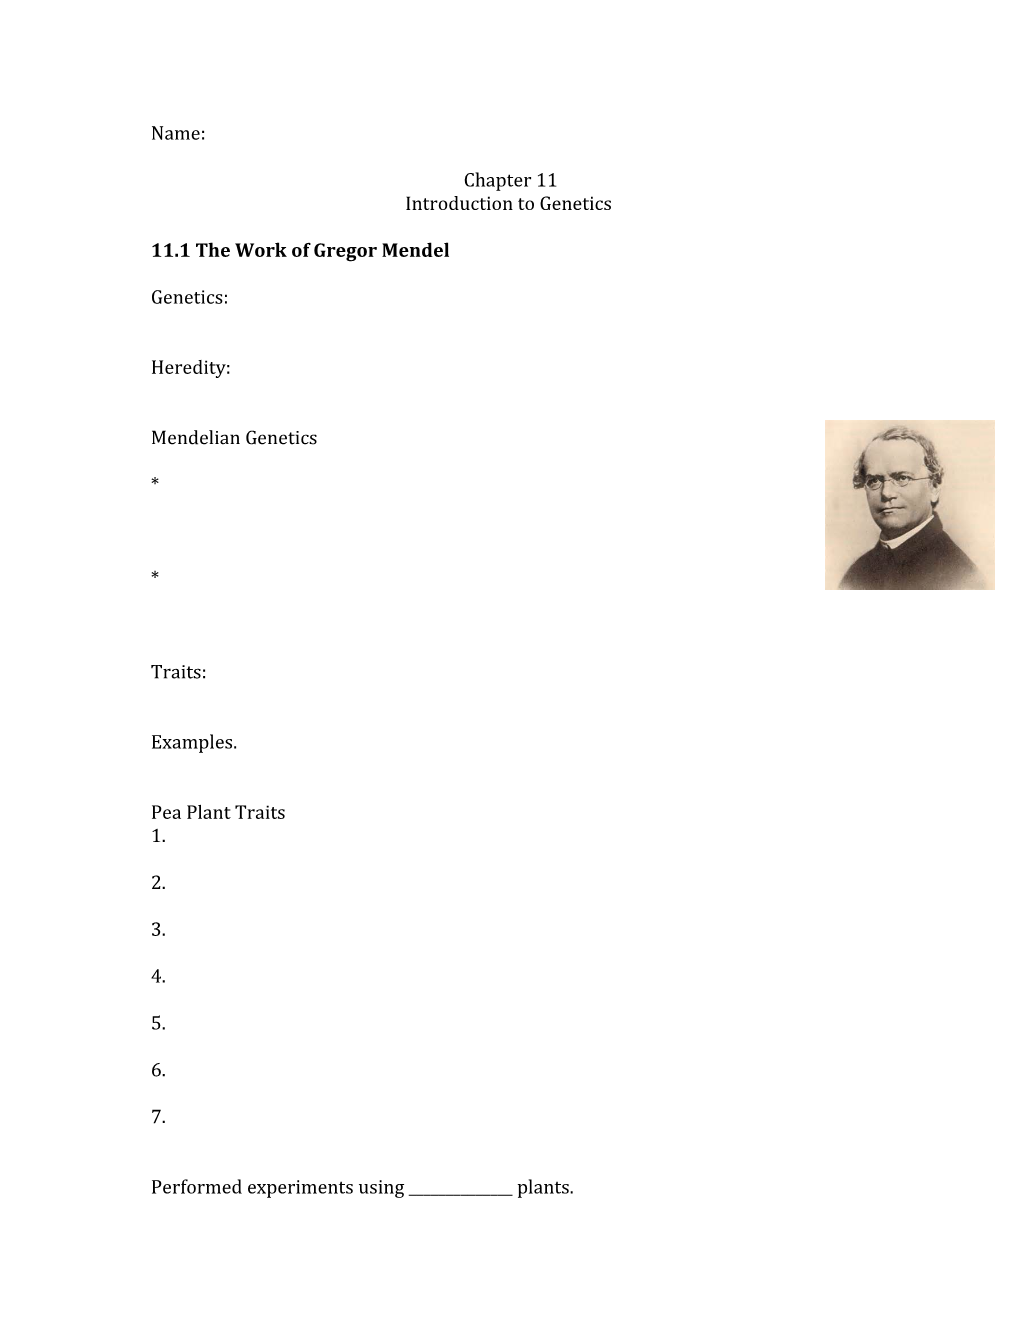 11.1 the Work of Gregor Mendel